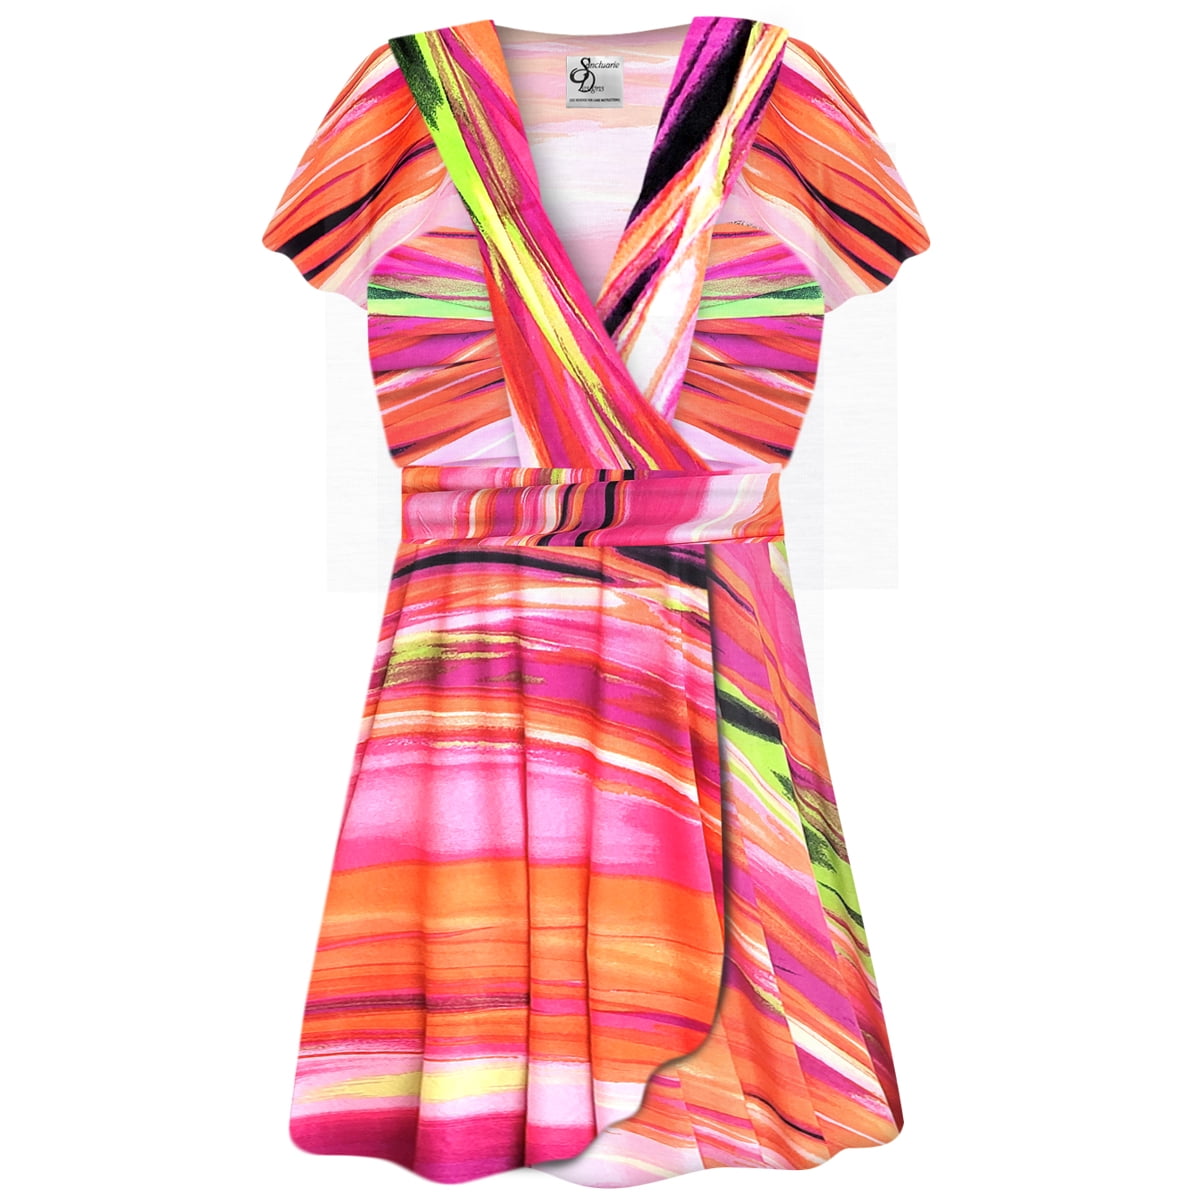 SALE! Orange or Green Customizable Solid Color Slinky Plus Size Dresses -  Tops & Skirts! 0x 1x 2x 3x 4x 5x 6x 7x 8x